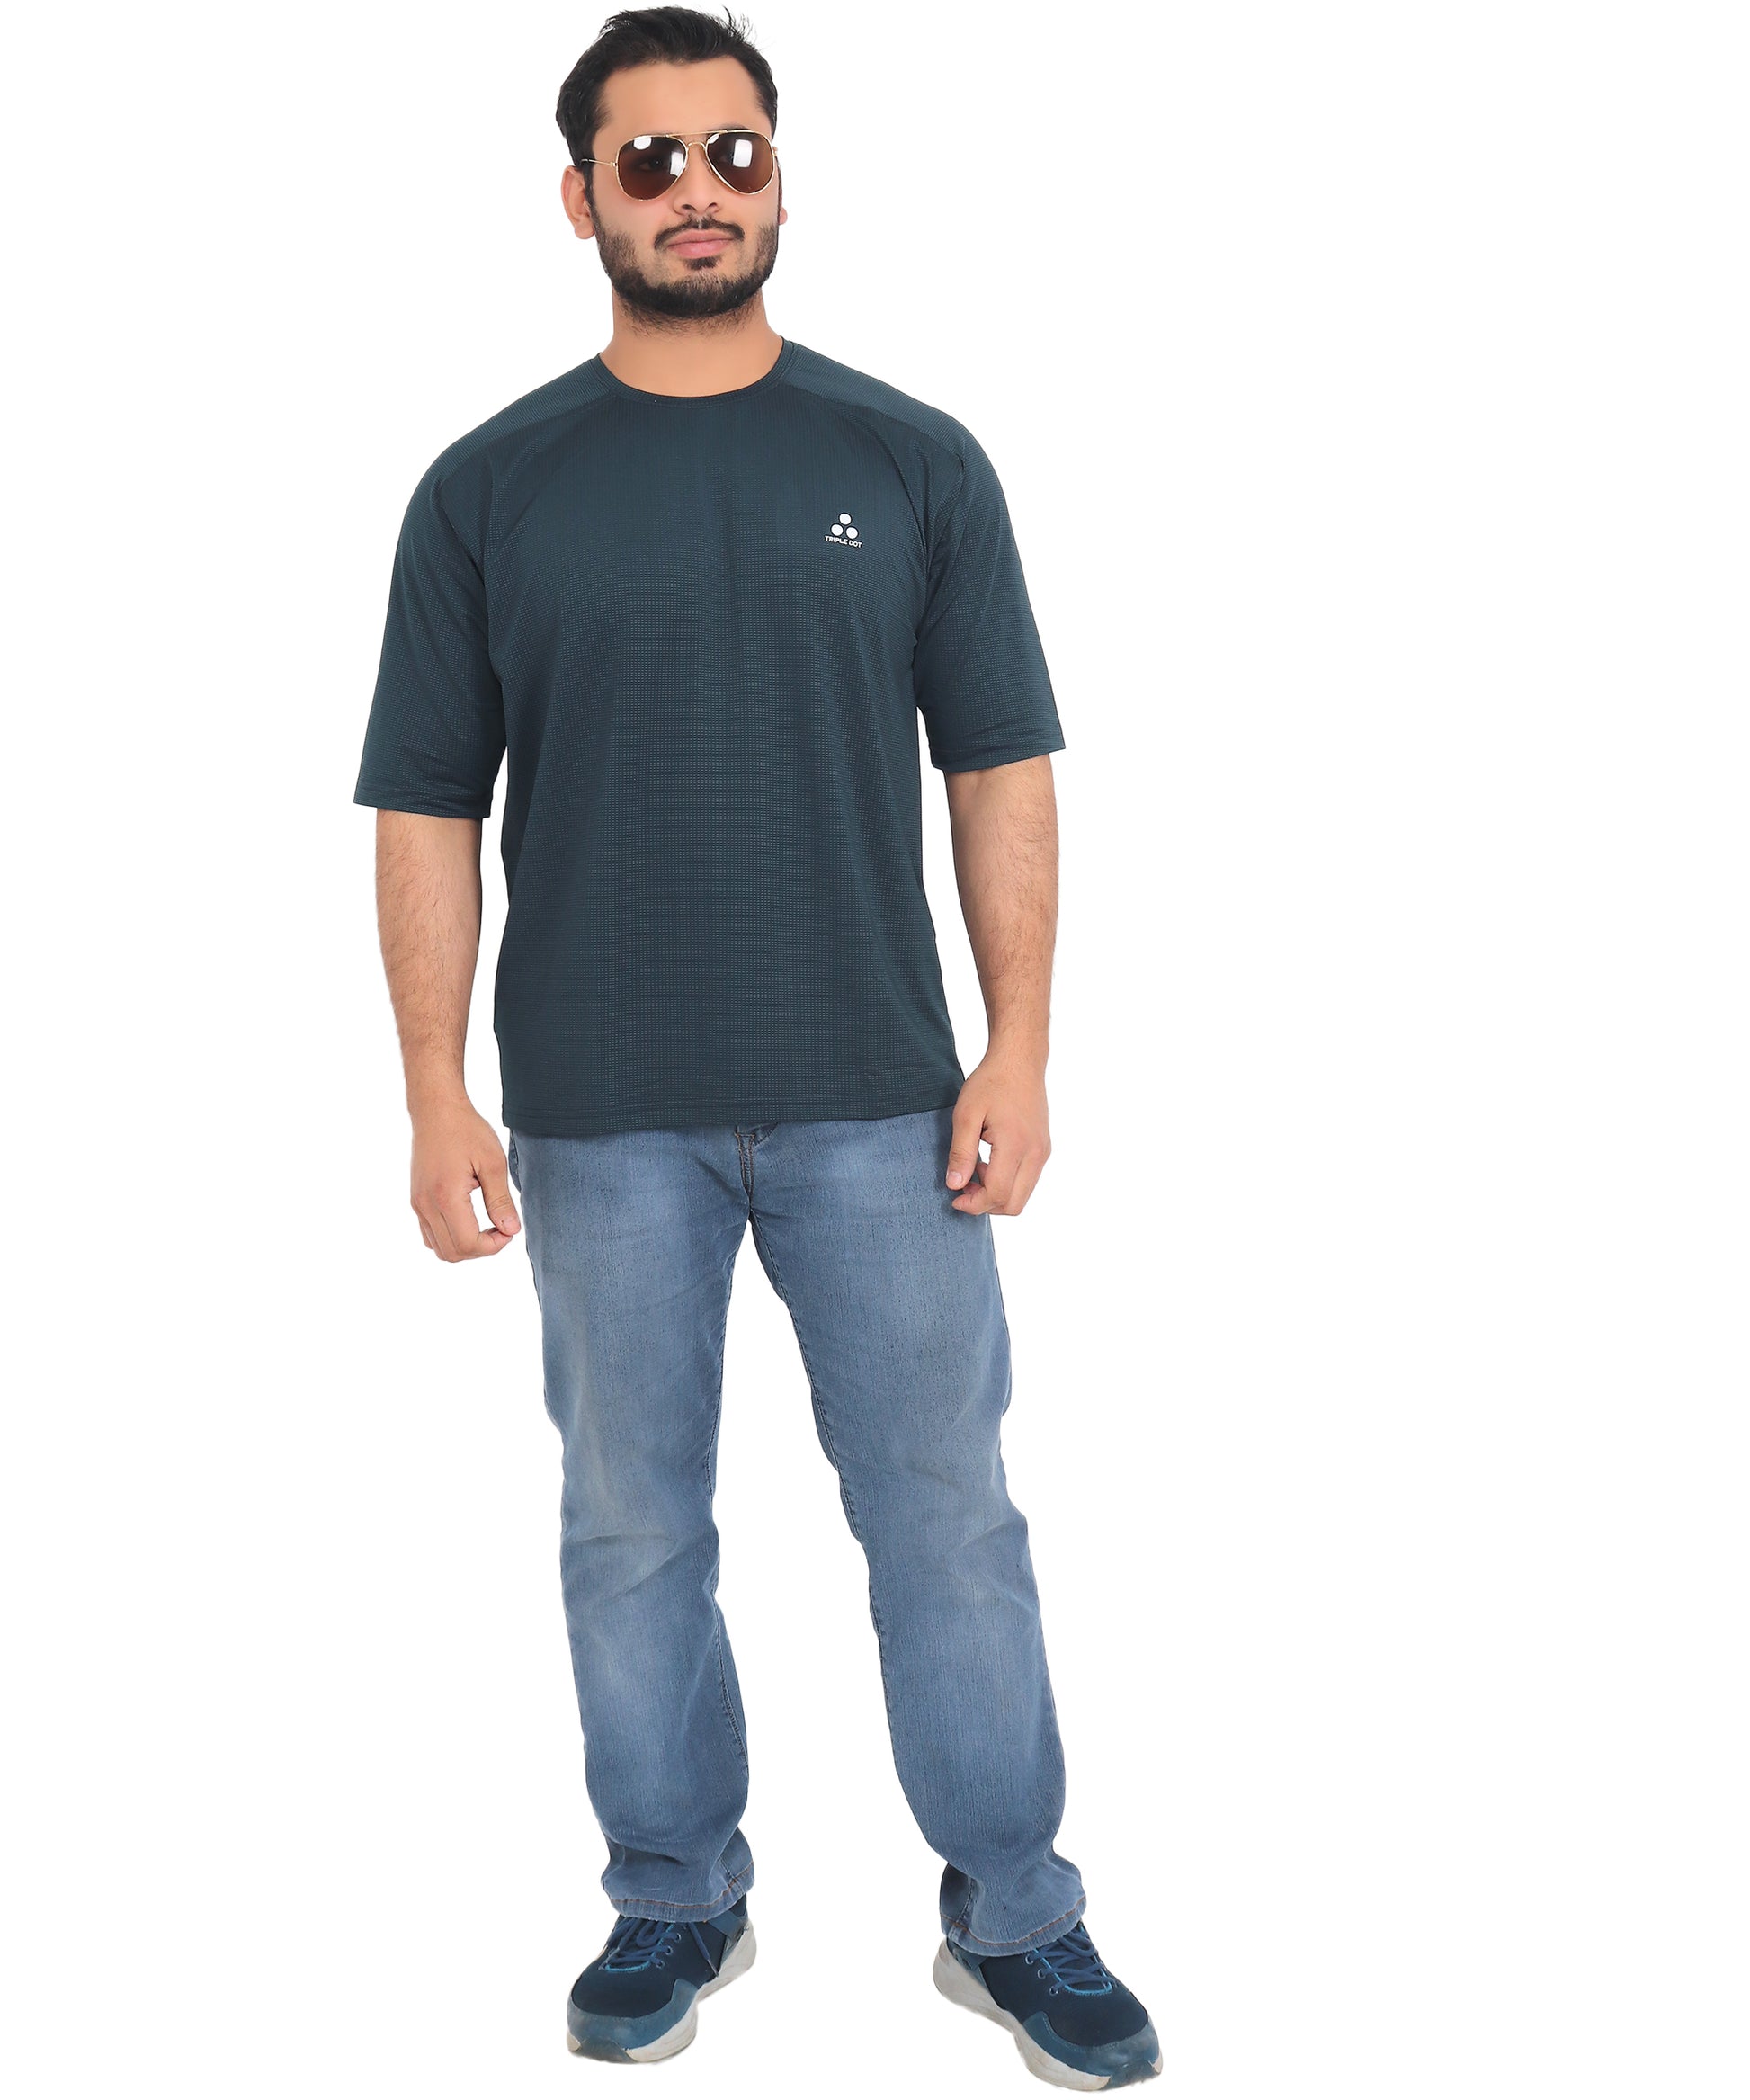 Triple Dot Royal Blue Dri Fit Polyester Drop Shoulder Sports T shirt for Men - Triple Dot Clothings